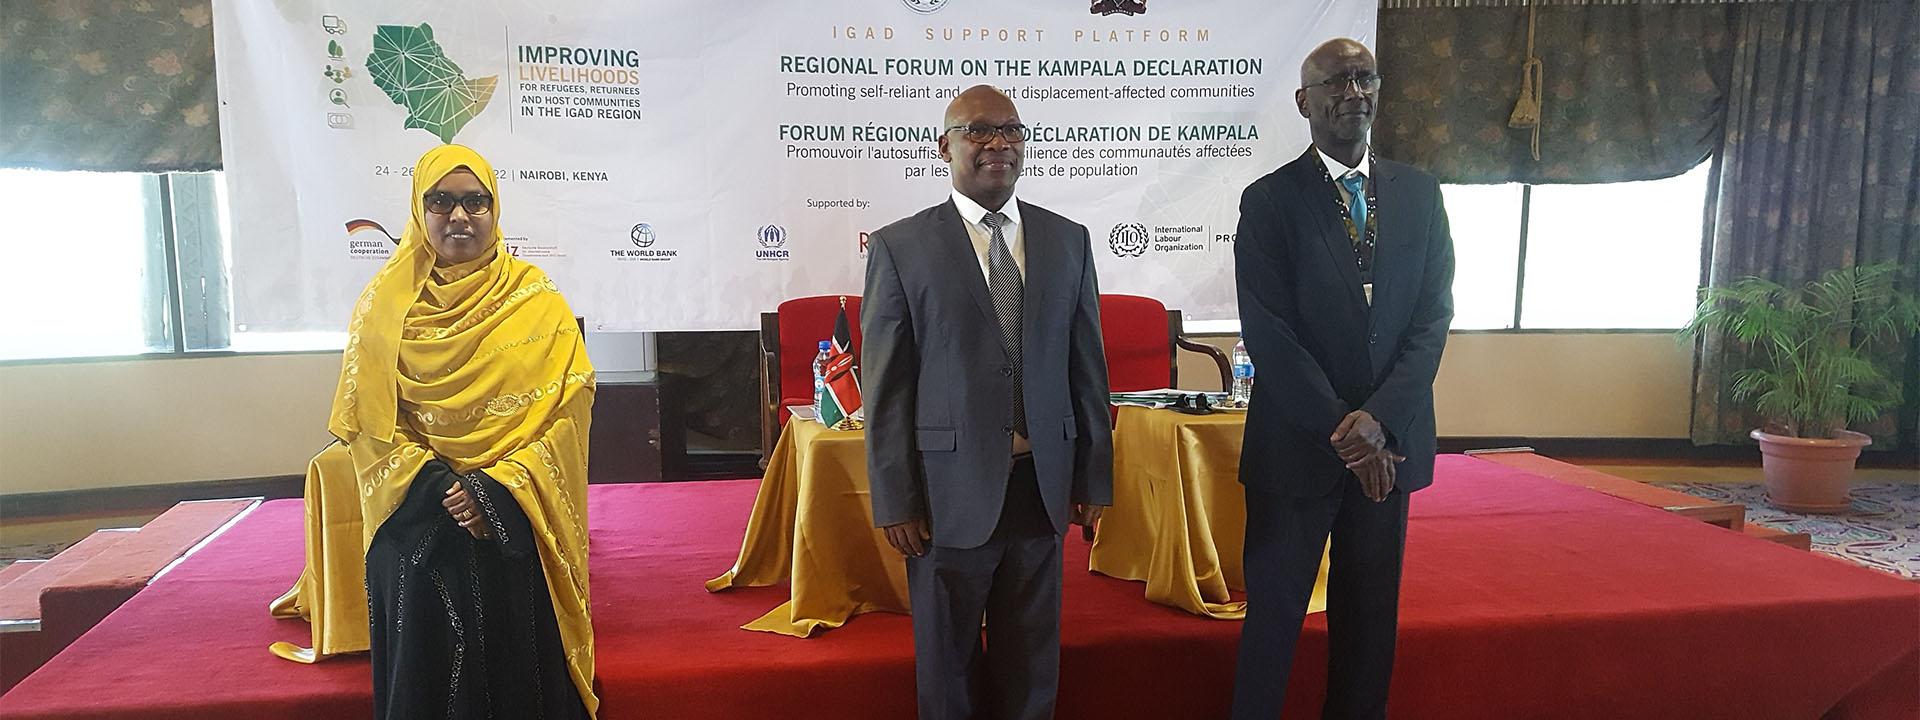 IGAD opened Regional Forum on the Kampala Declaration